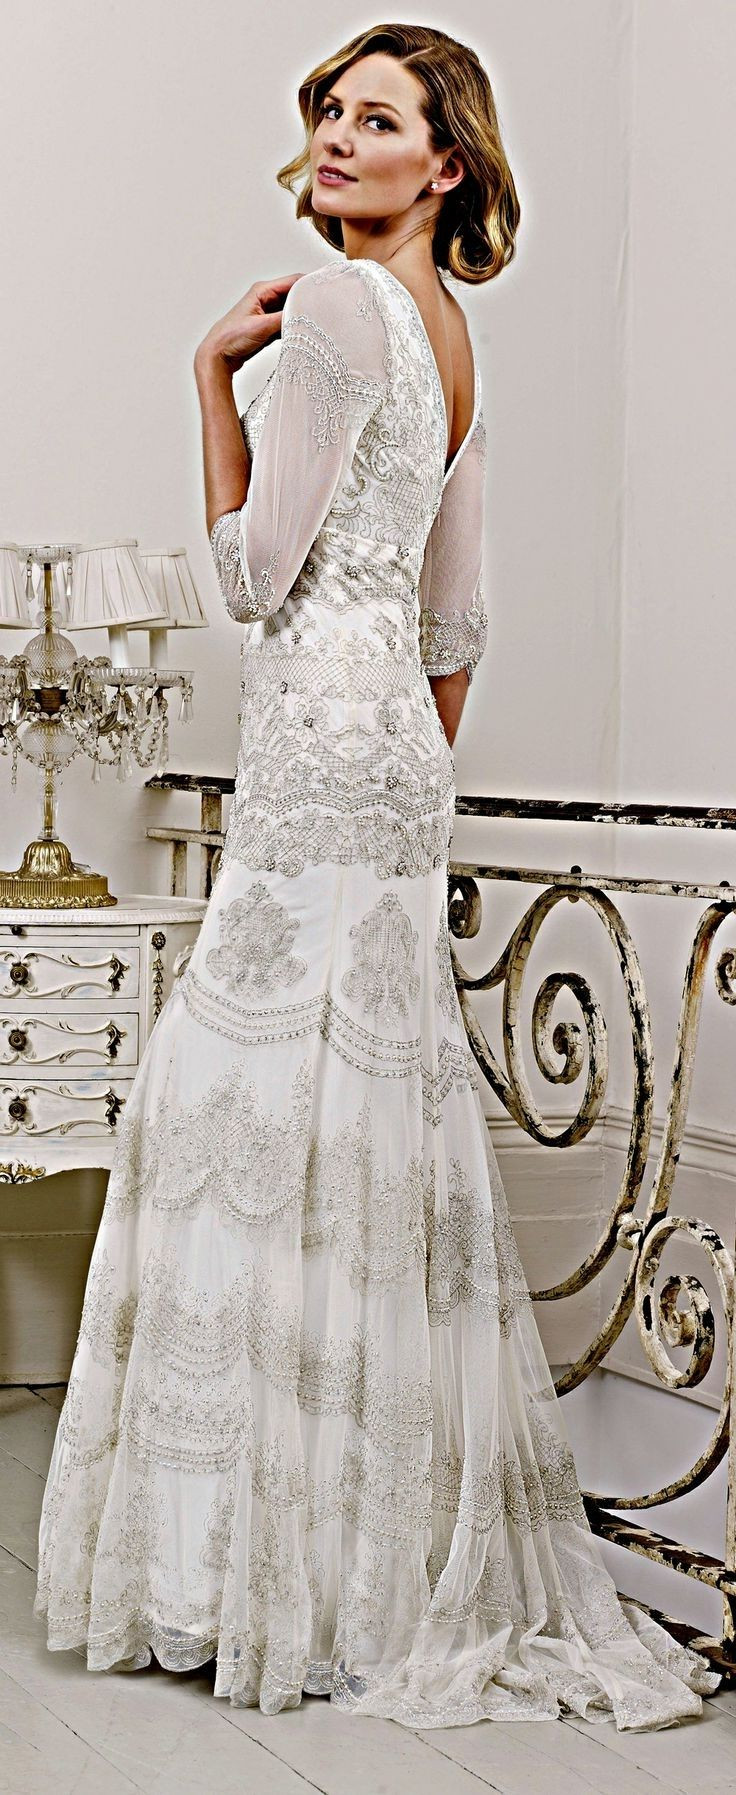 Wedding Dresses For Second Weddings
 Best 25 Second wedding dresses ideas on Pinterest